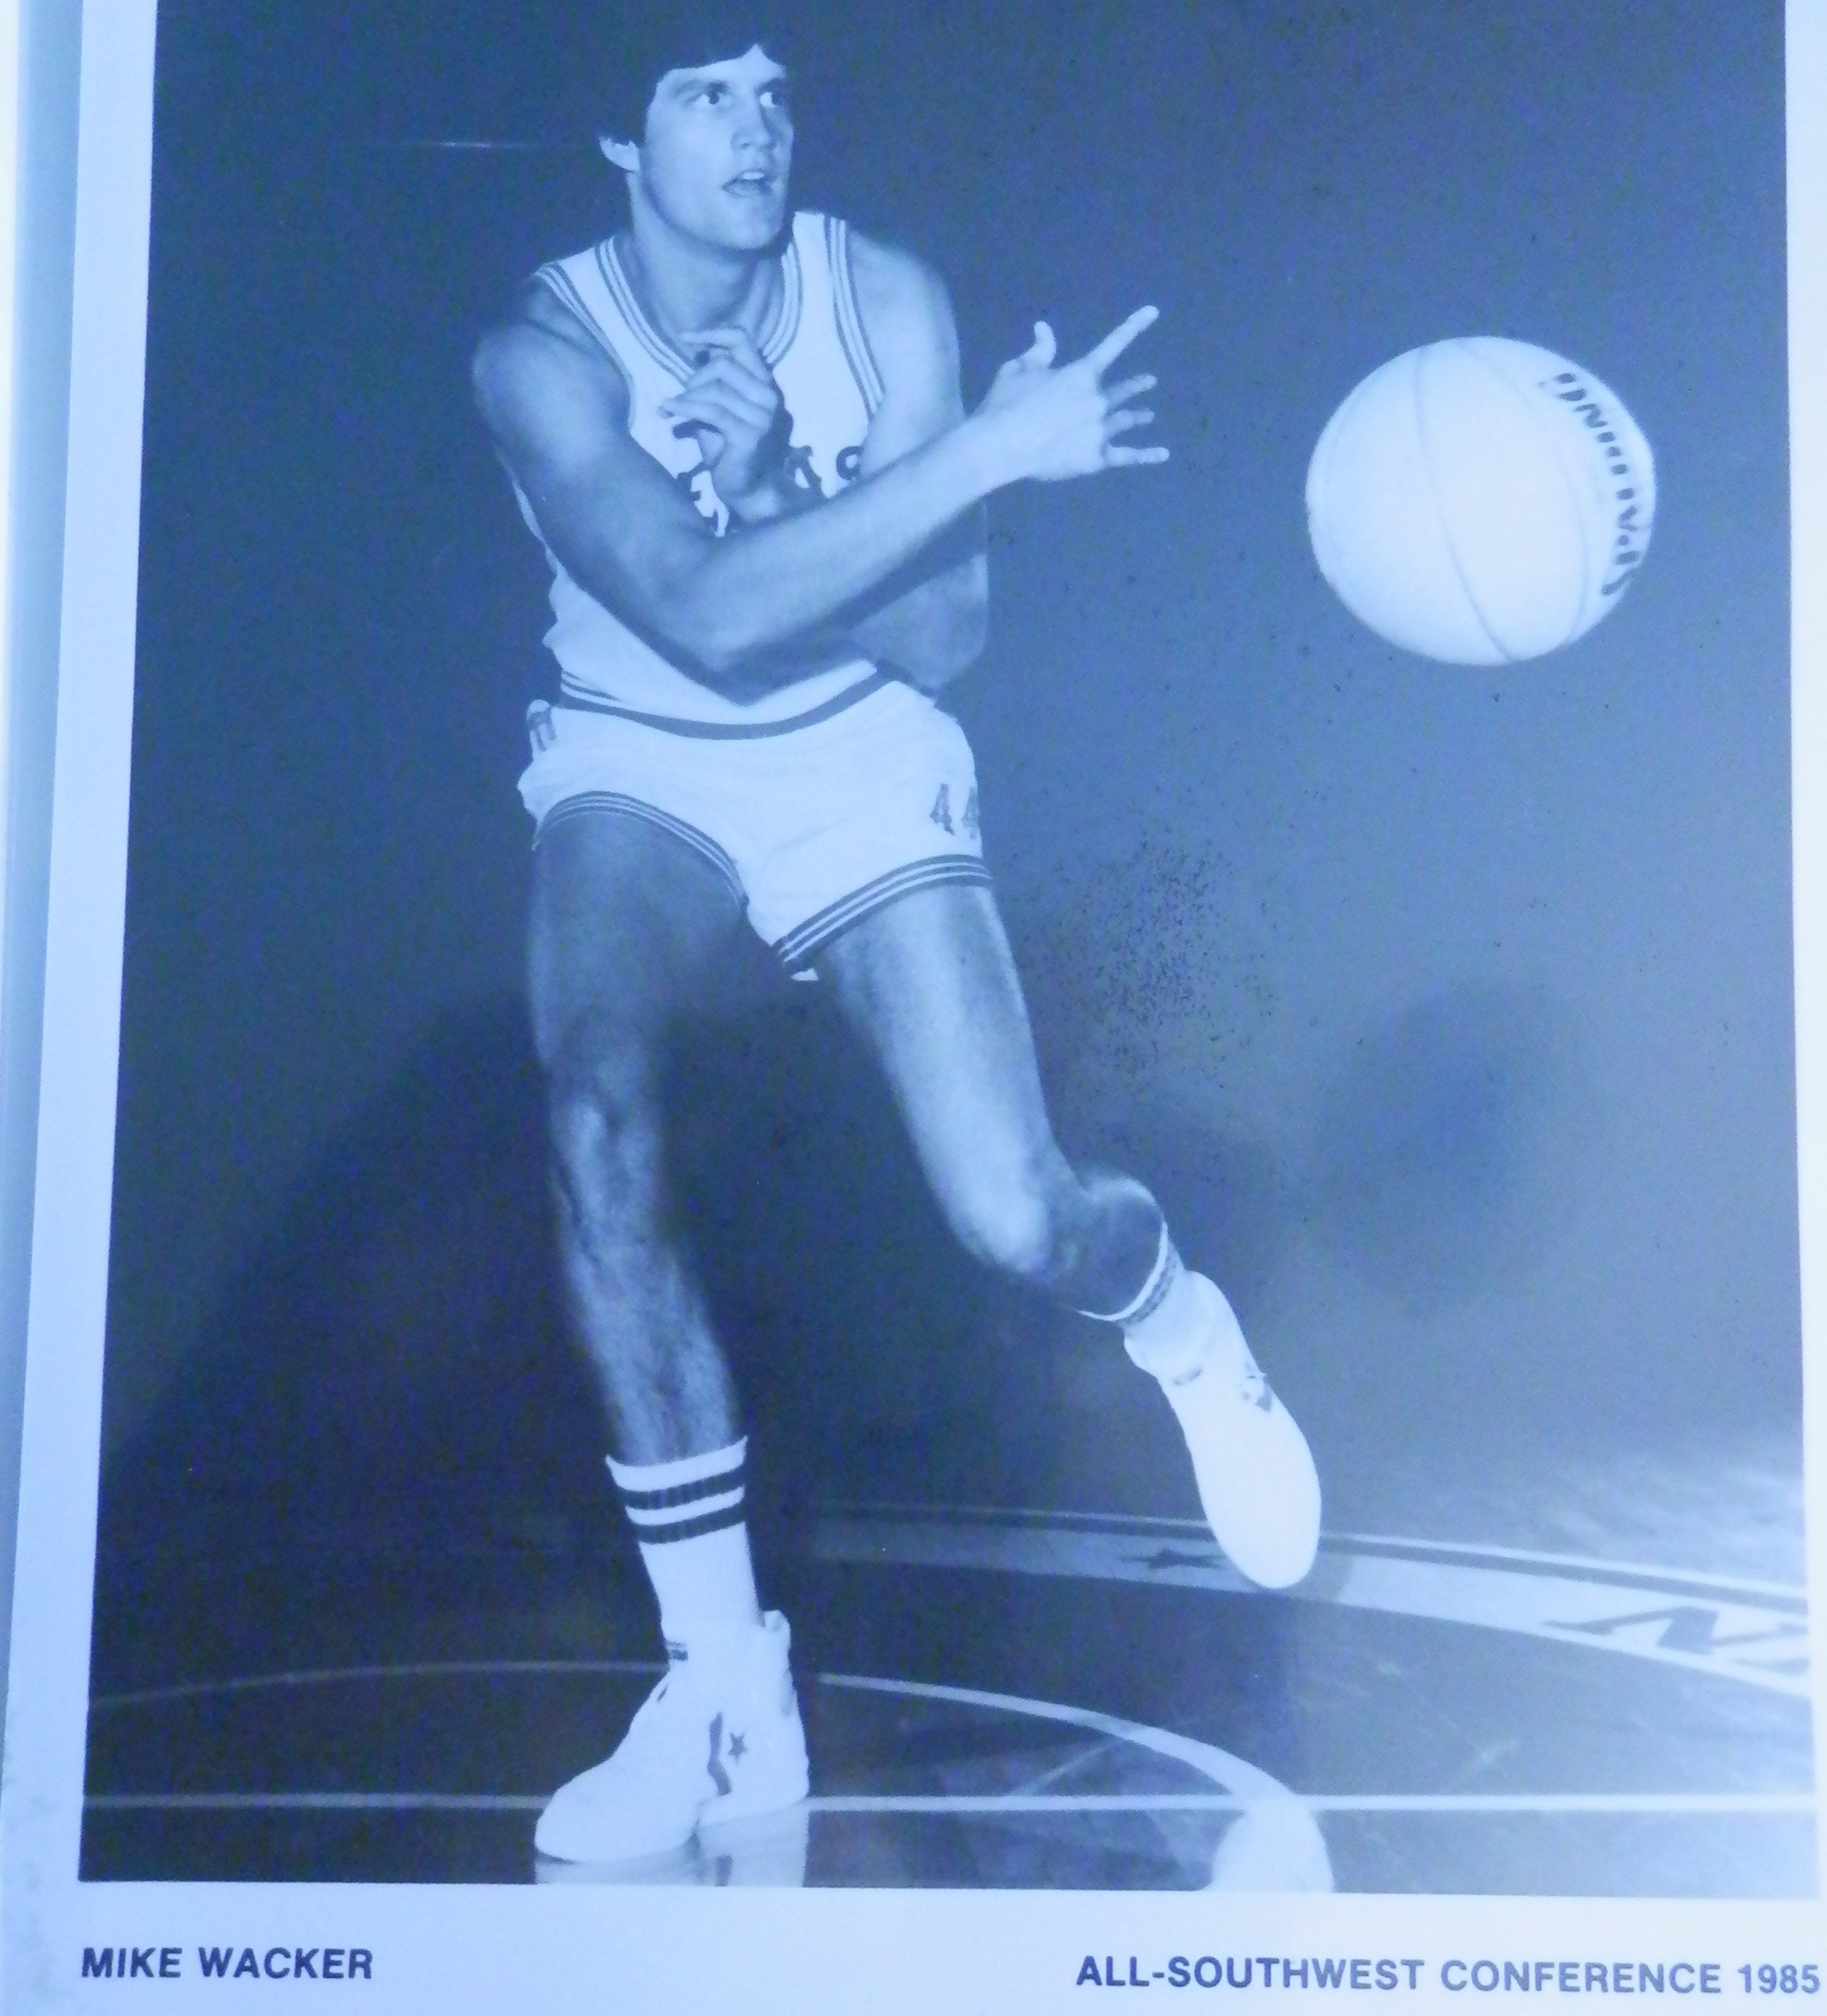 1982 Mike Wacker basketball.JPG